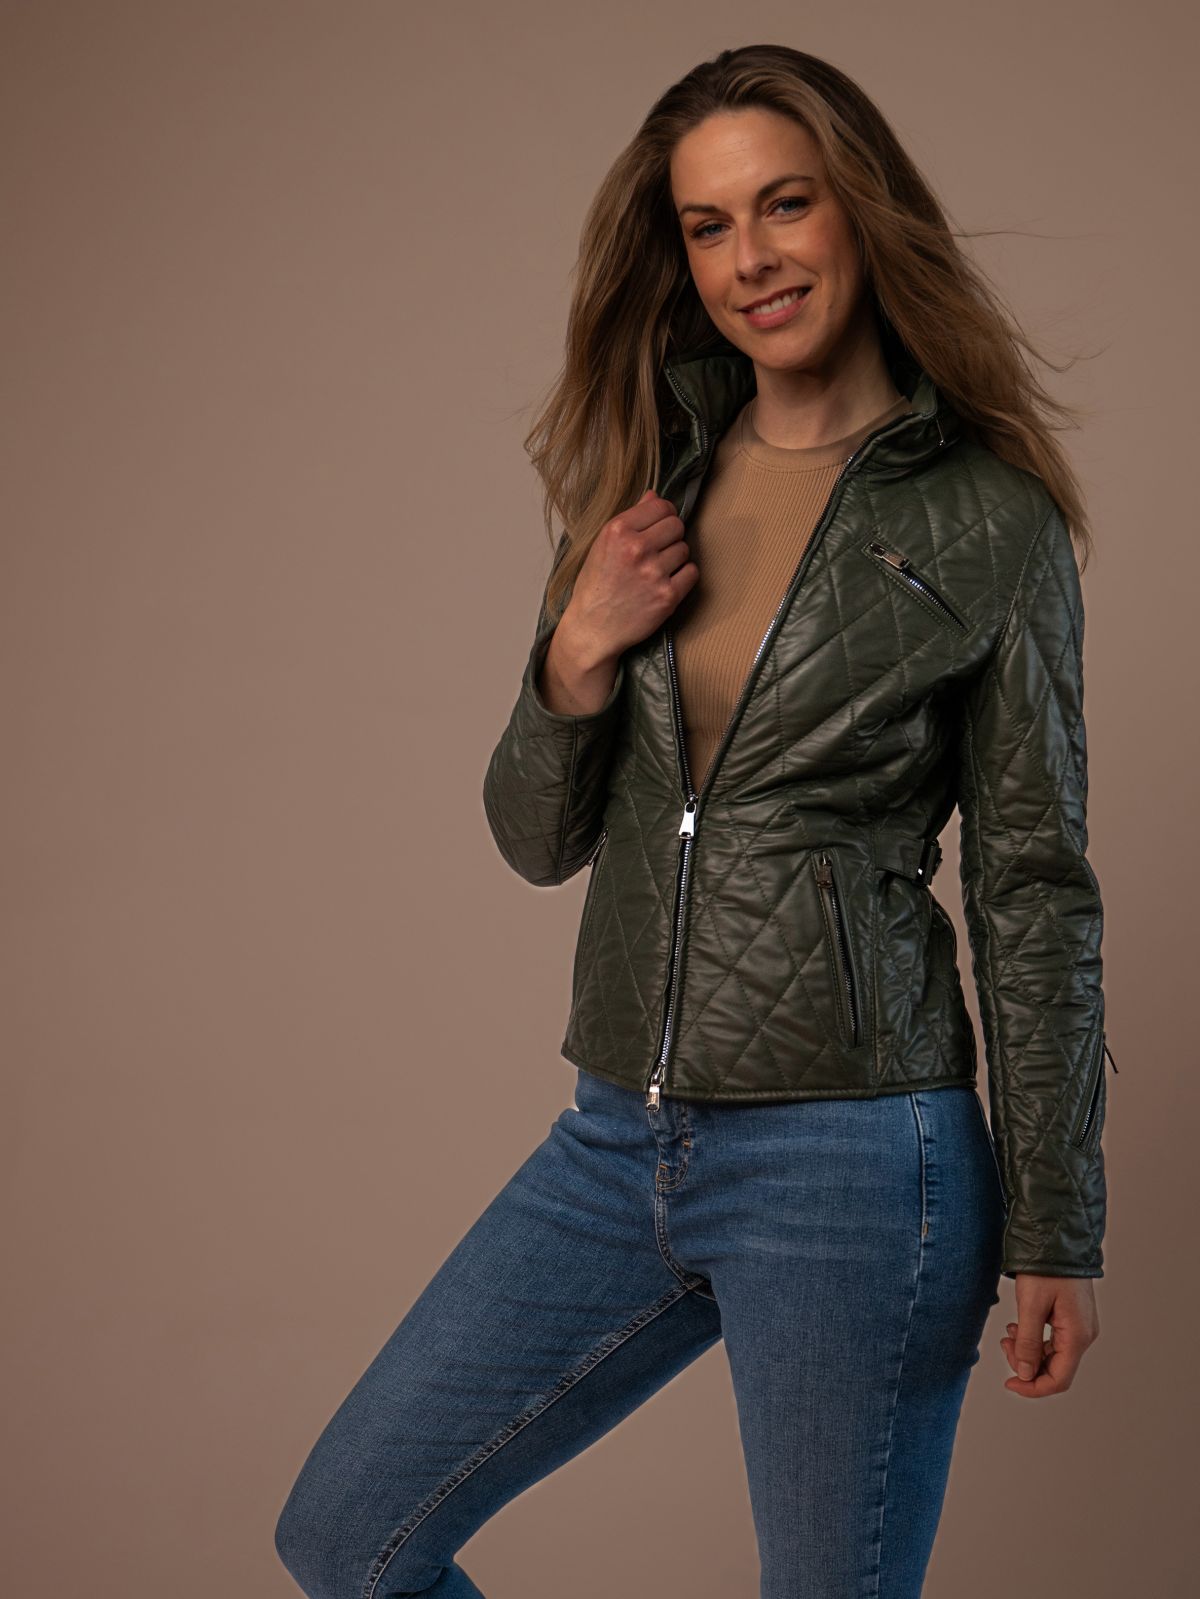 Virginia € Leather 2.499,00 Jacket, Quilted Ladies